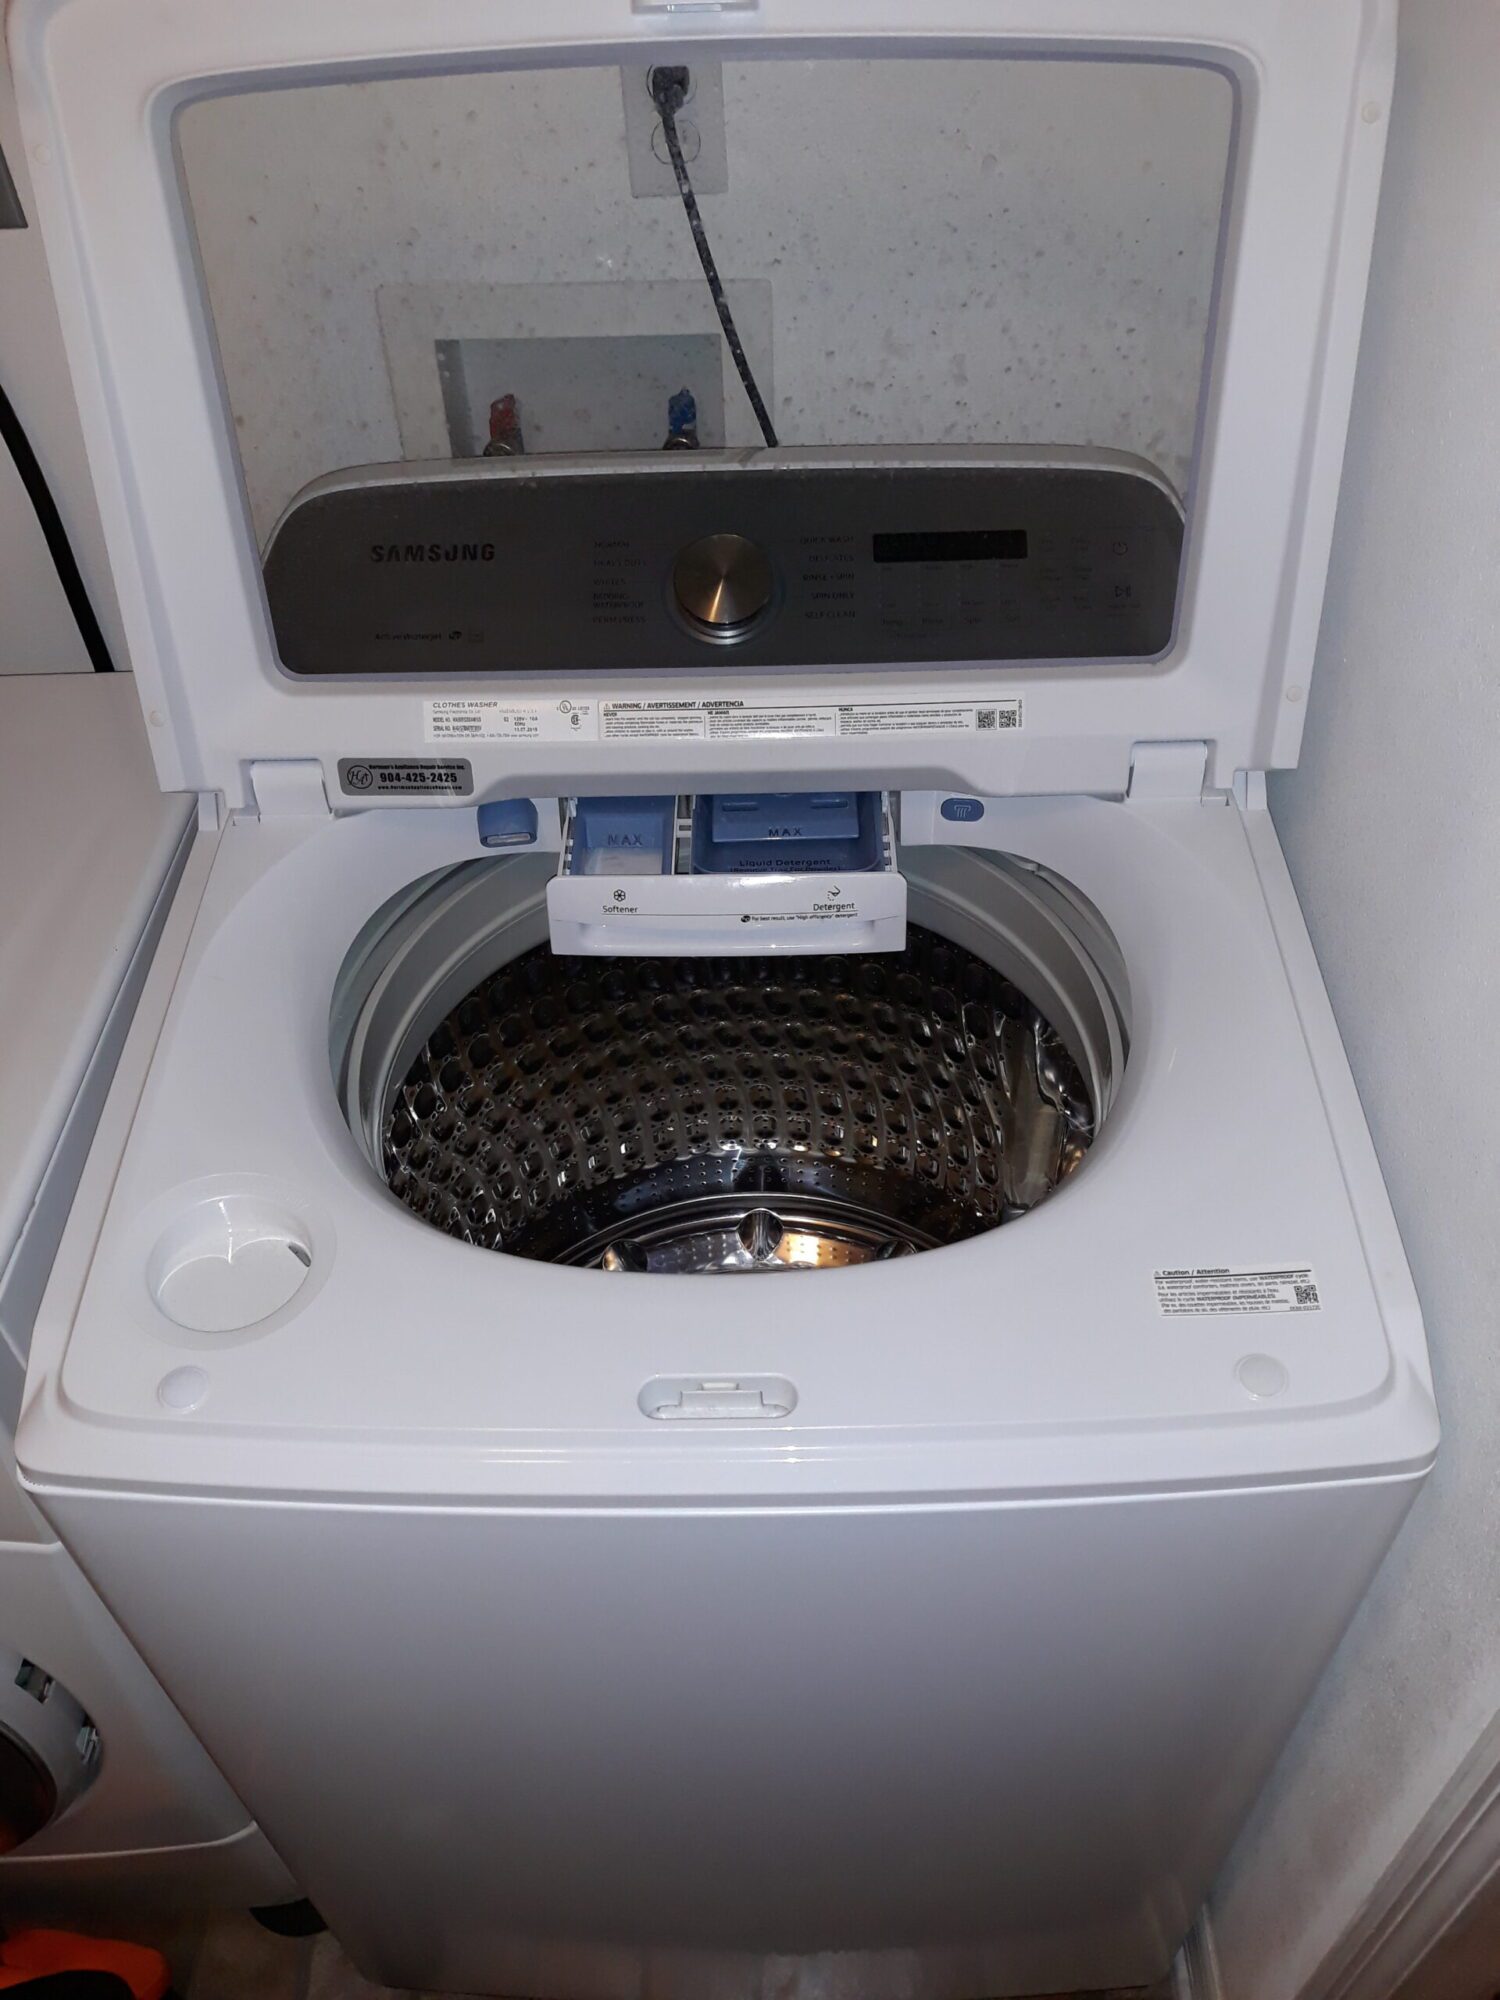 appliance repair washer repair repair require replacement of the failed main control board cherry st groveland fl 34736